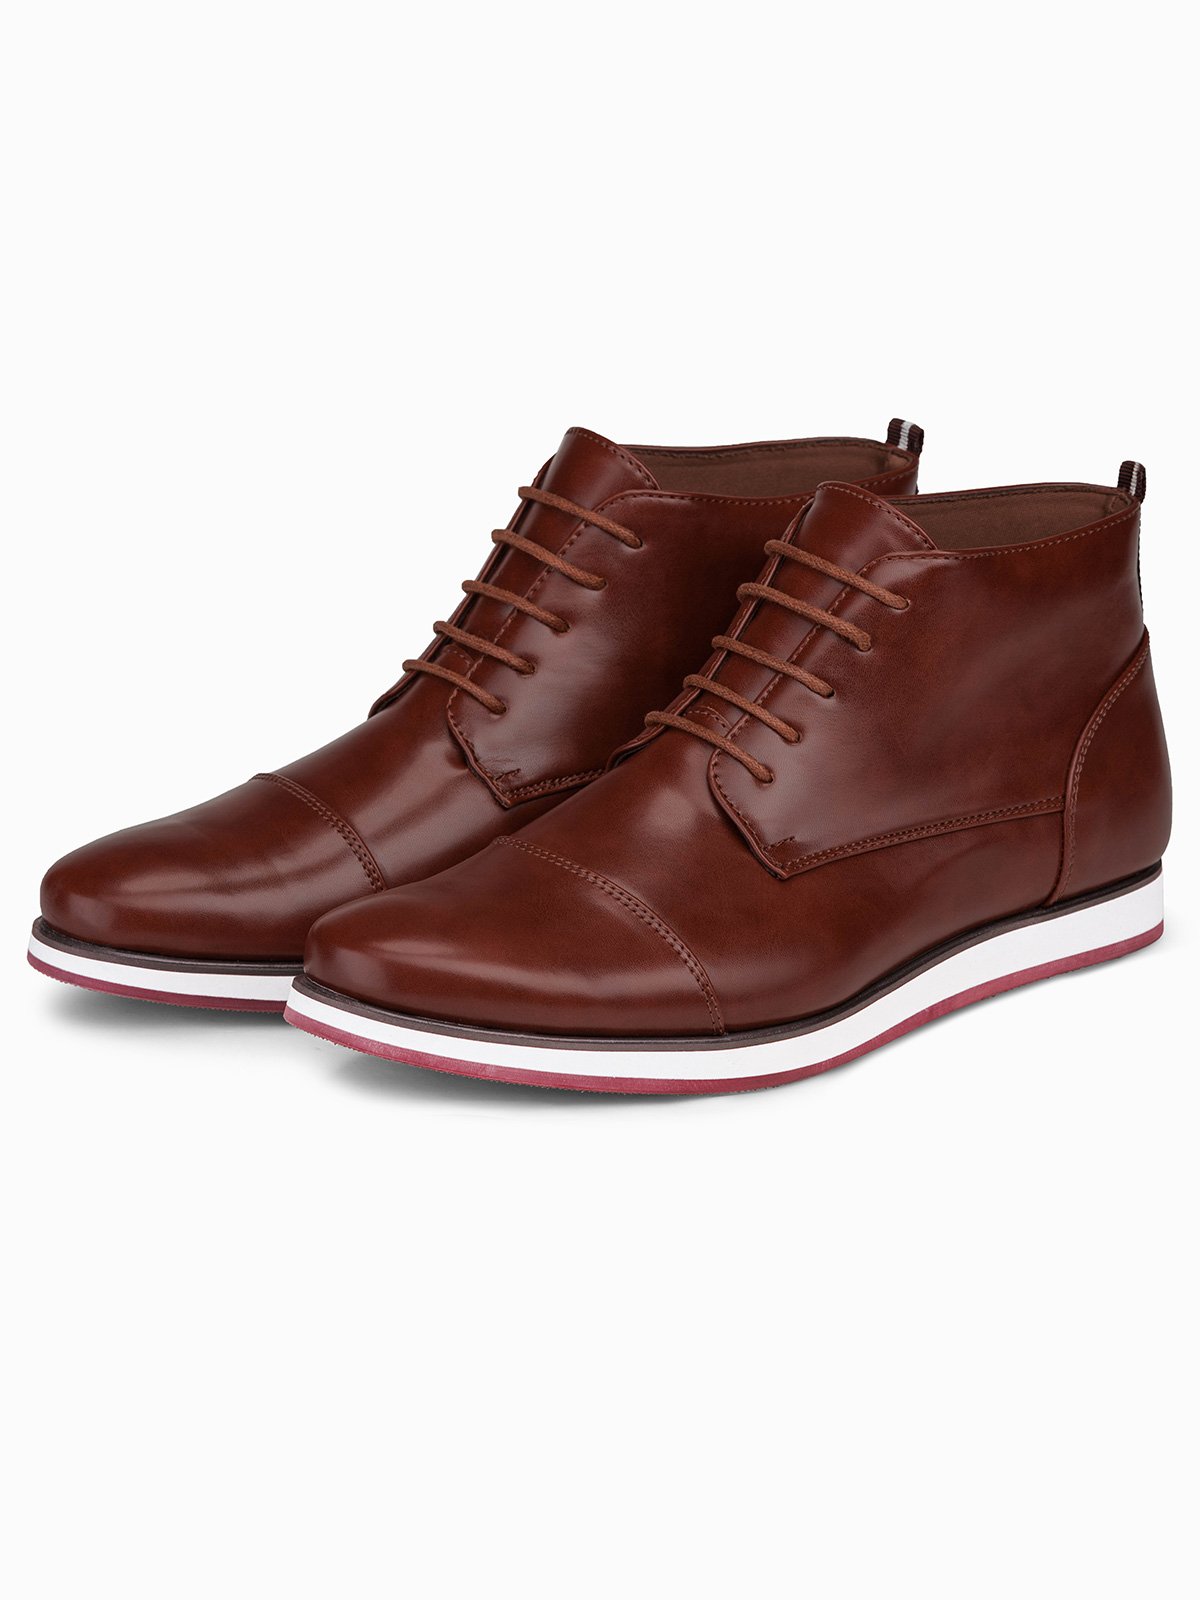 Men's shoes T326 - light brown | MODONE wholesale - Clothing For Men